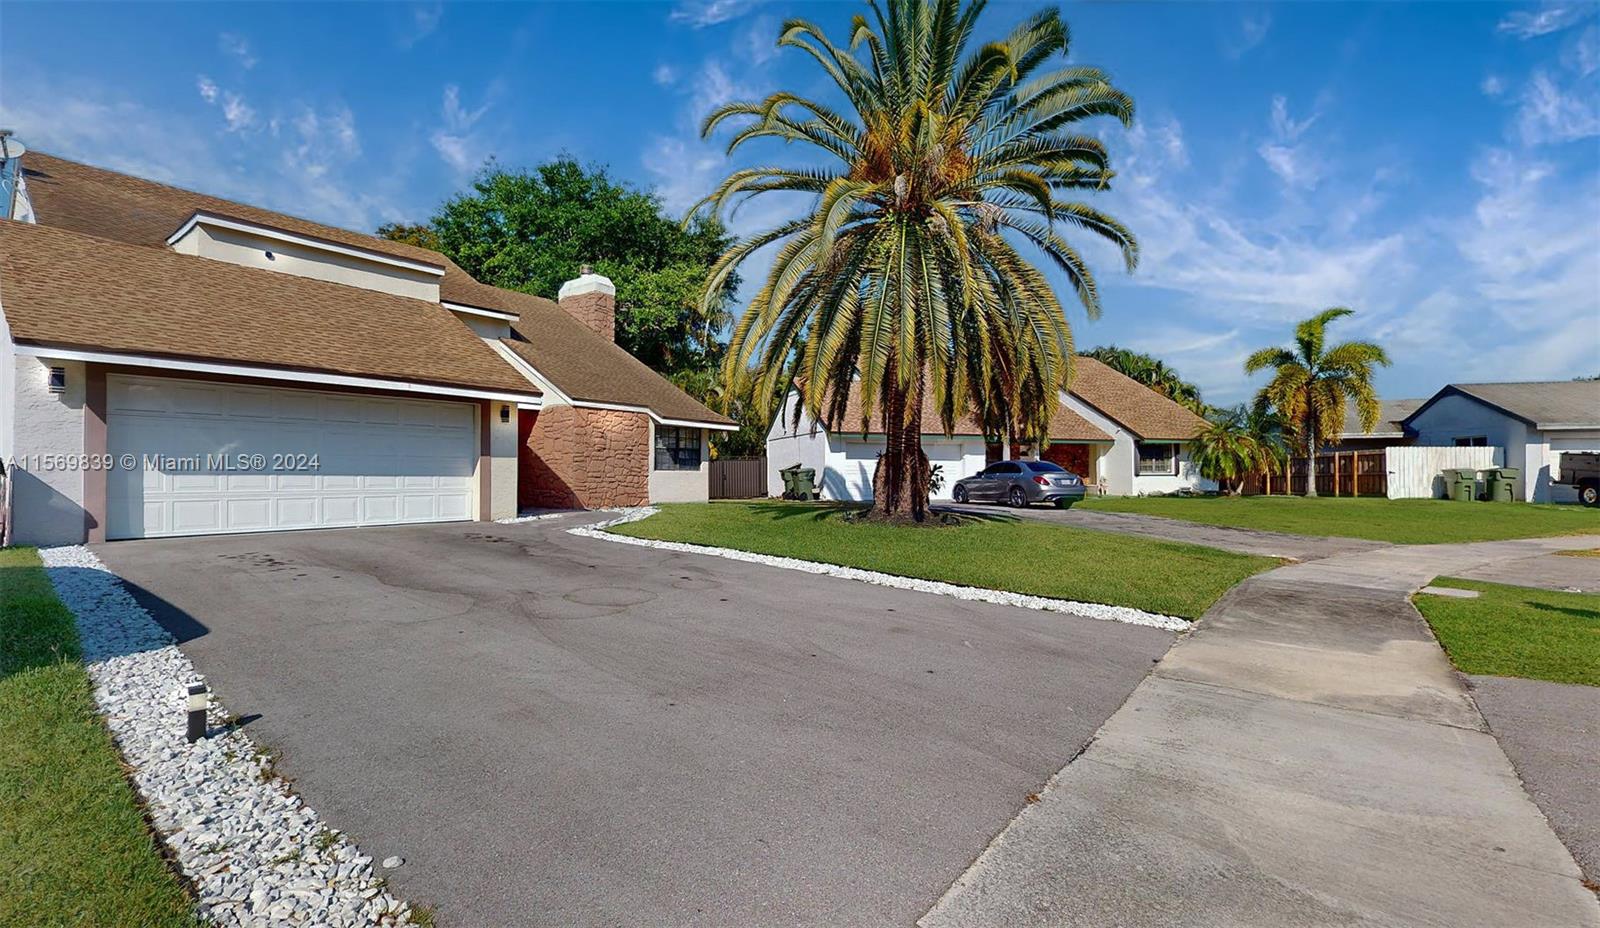 Property for Sale at 1547 Flamingo Ct, Homestead, Miami-Dade County, Florida - Bedrooms: 4 
Bathrooms: 3  - $599,500